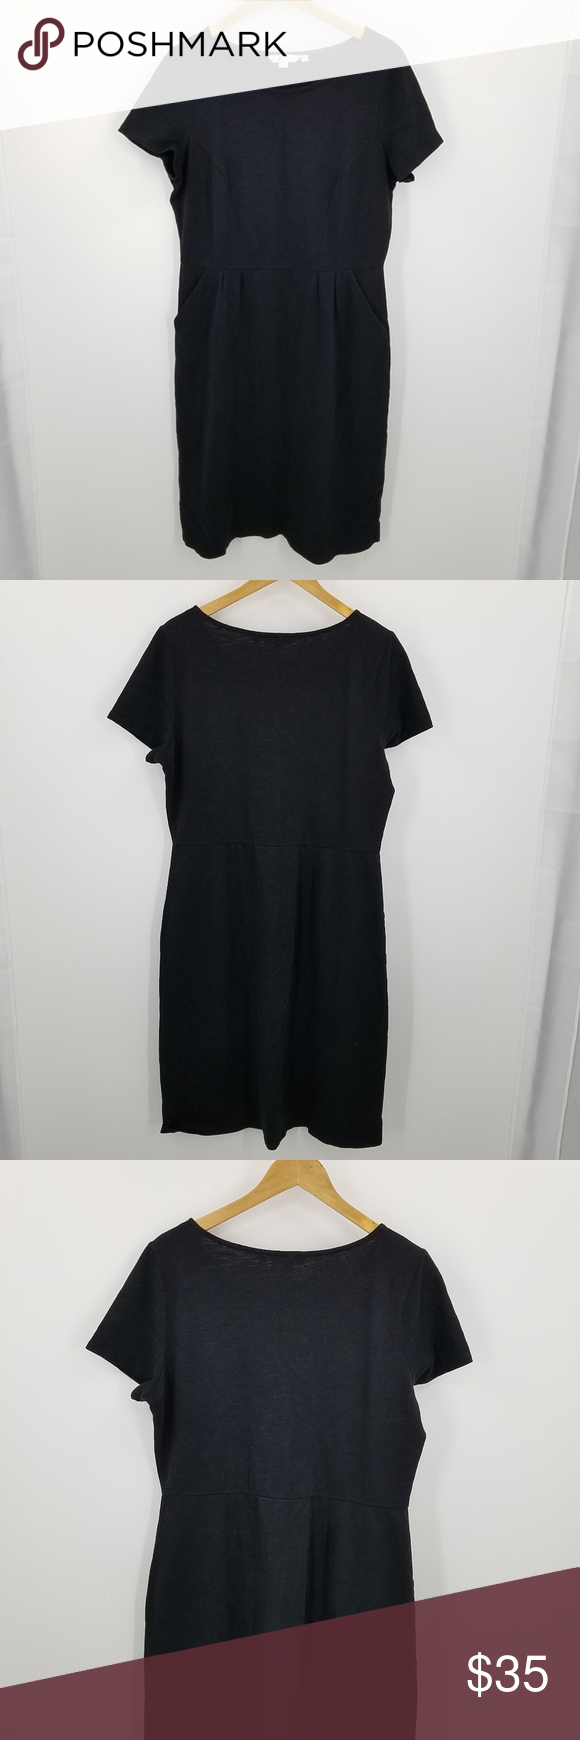 Boden Black Short Sleeve Shift Dress Size 12 In 2020